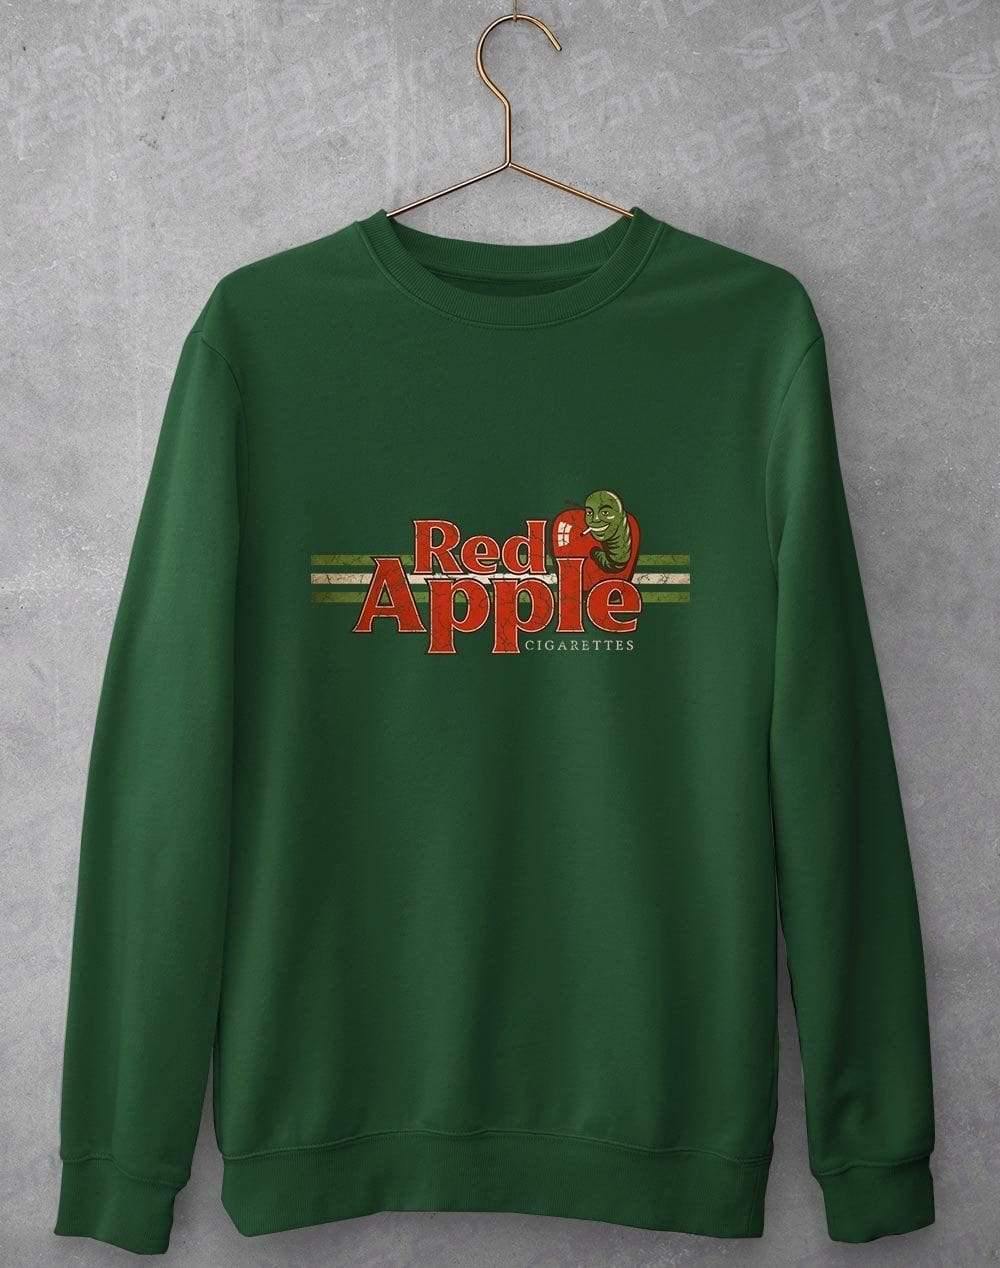 Red Apple Cigarettes Sweatshirt S / Bottle  - Off World Tees